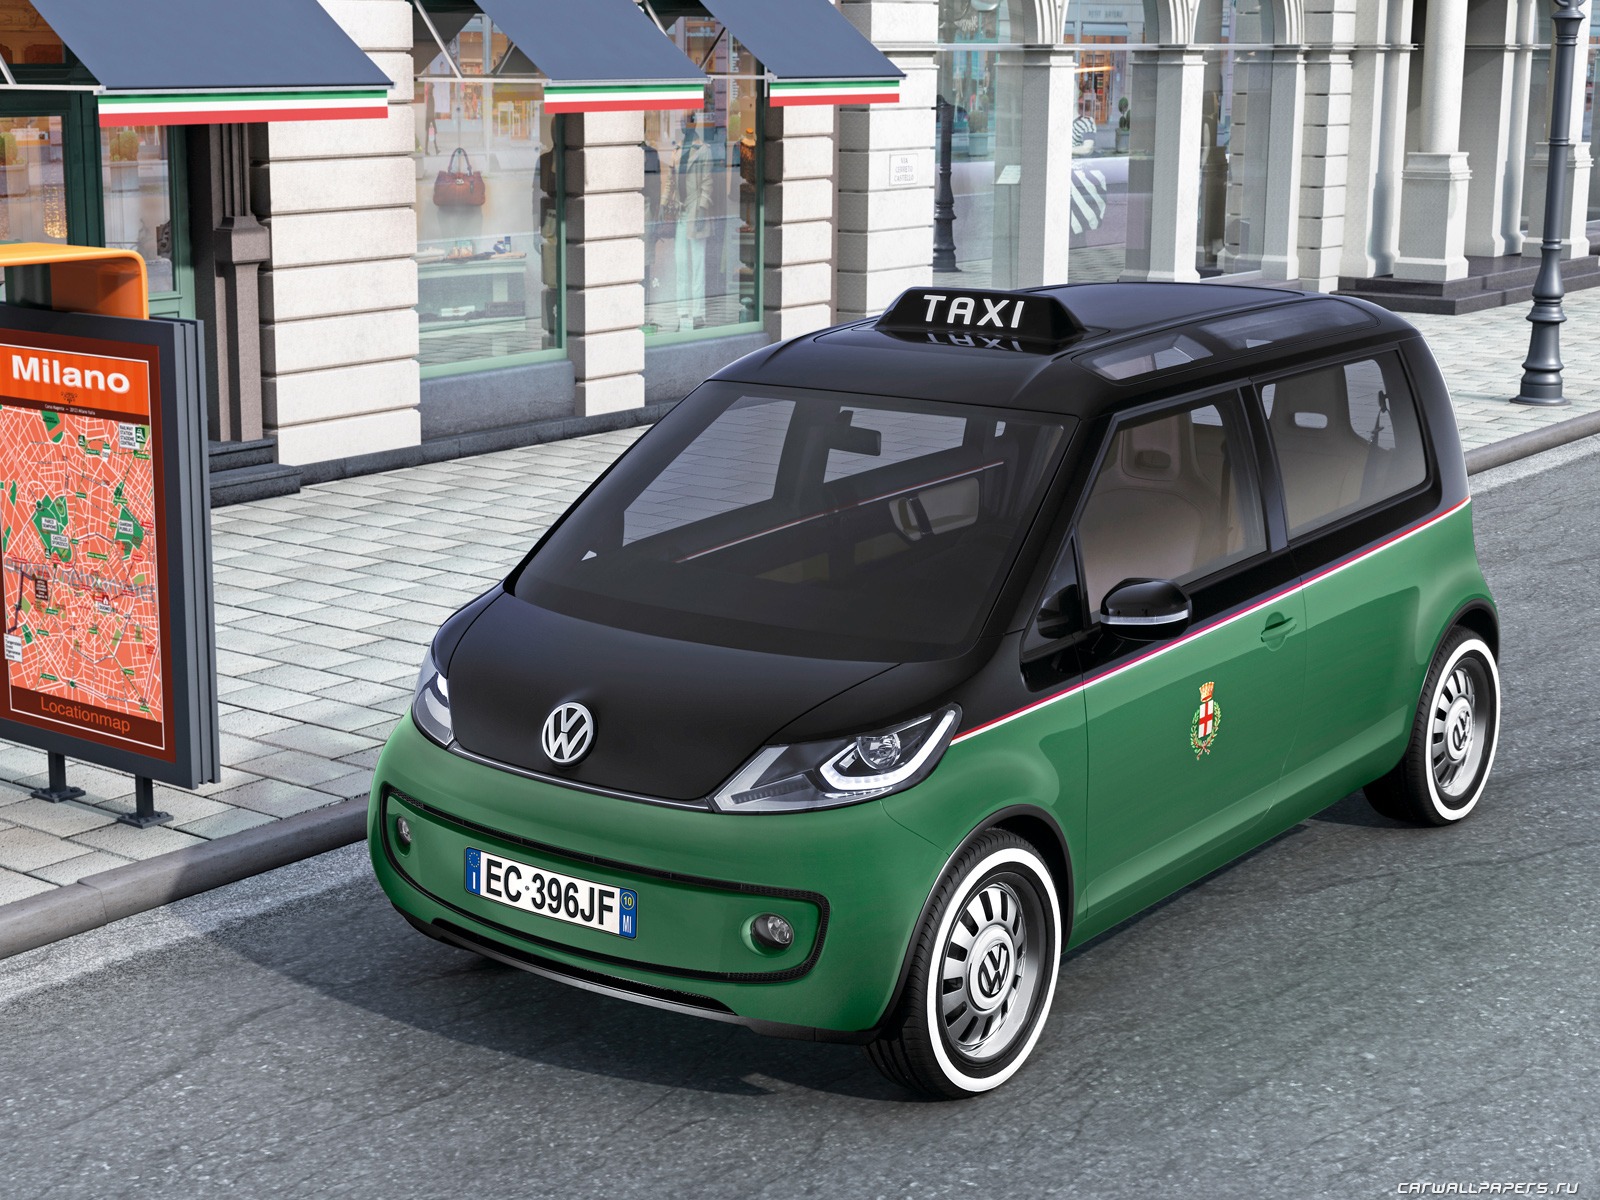 Concept Car Volkswagen Milano Taxi - 2010 大众2 - 1600x1200